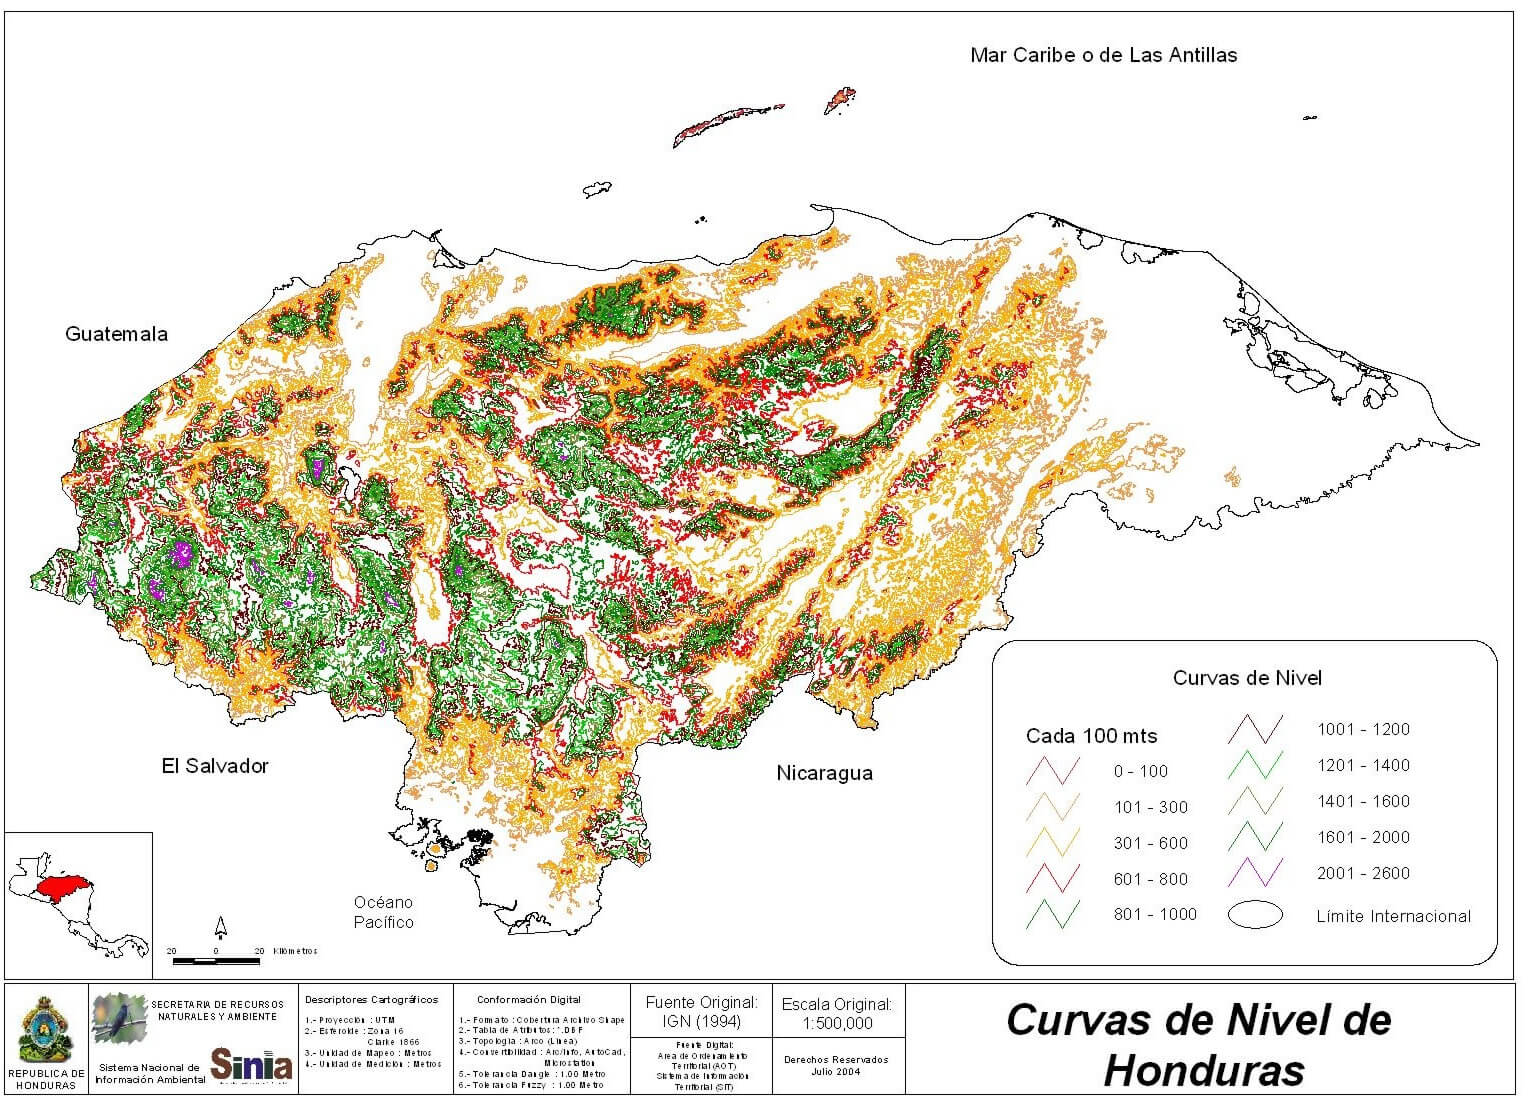 Honduras Elevation Level Curves Map 2004